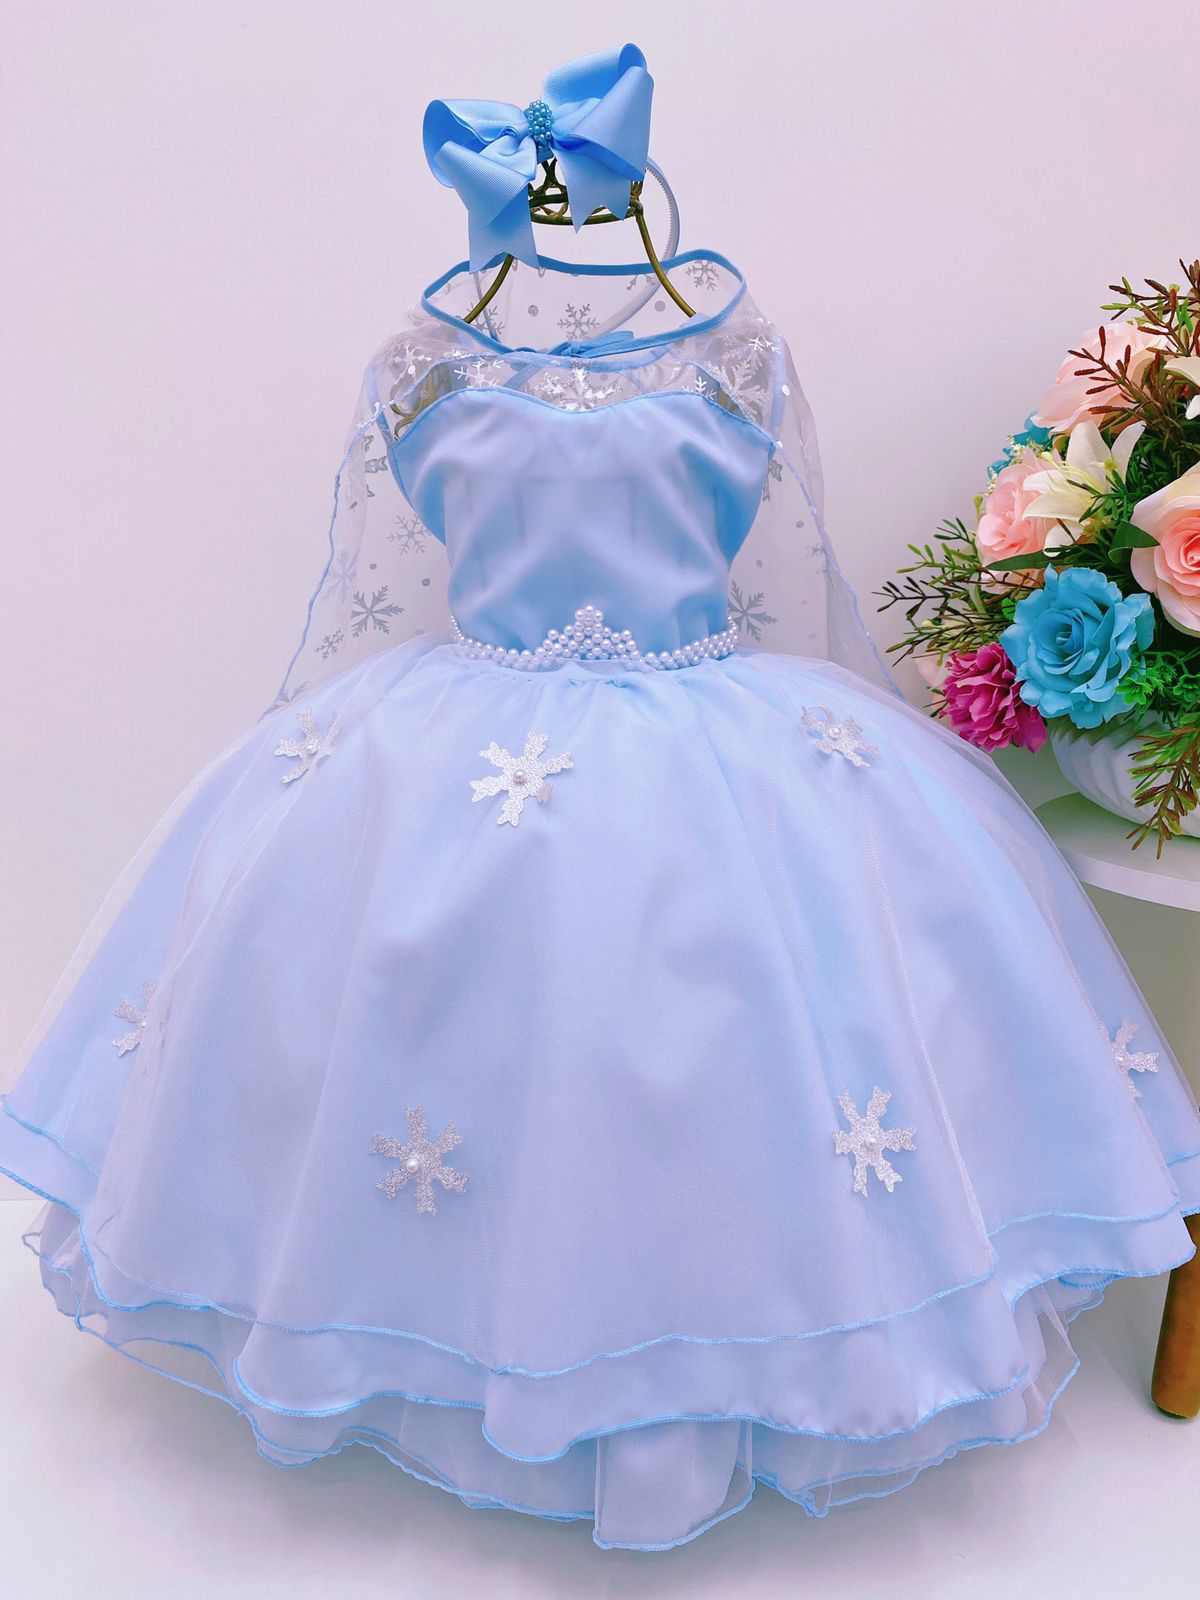 Vestido Infantil Frozen Azul Princesas com Capa Luxo